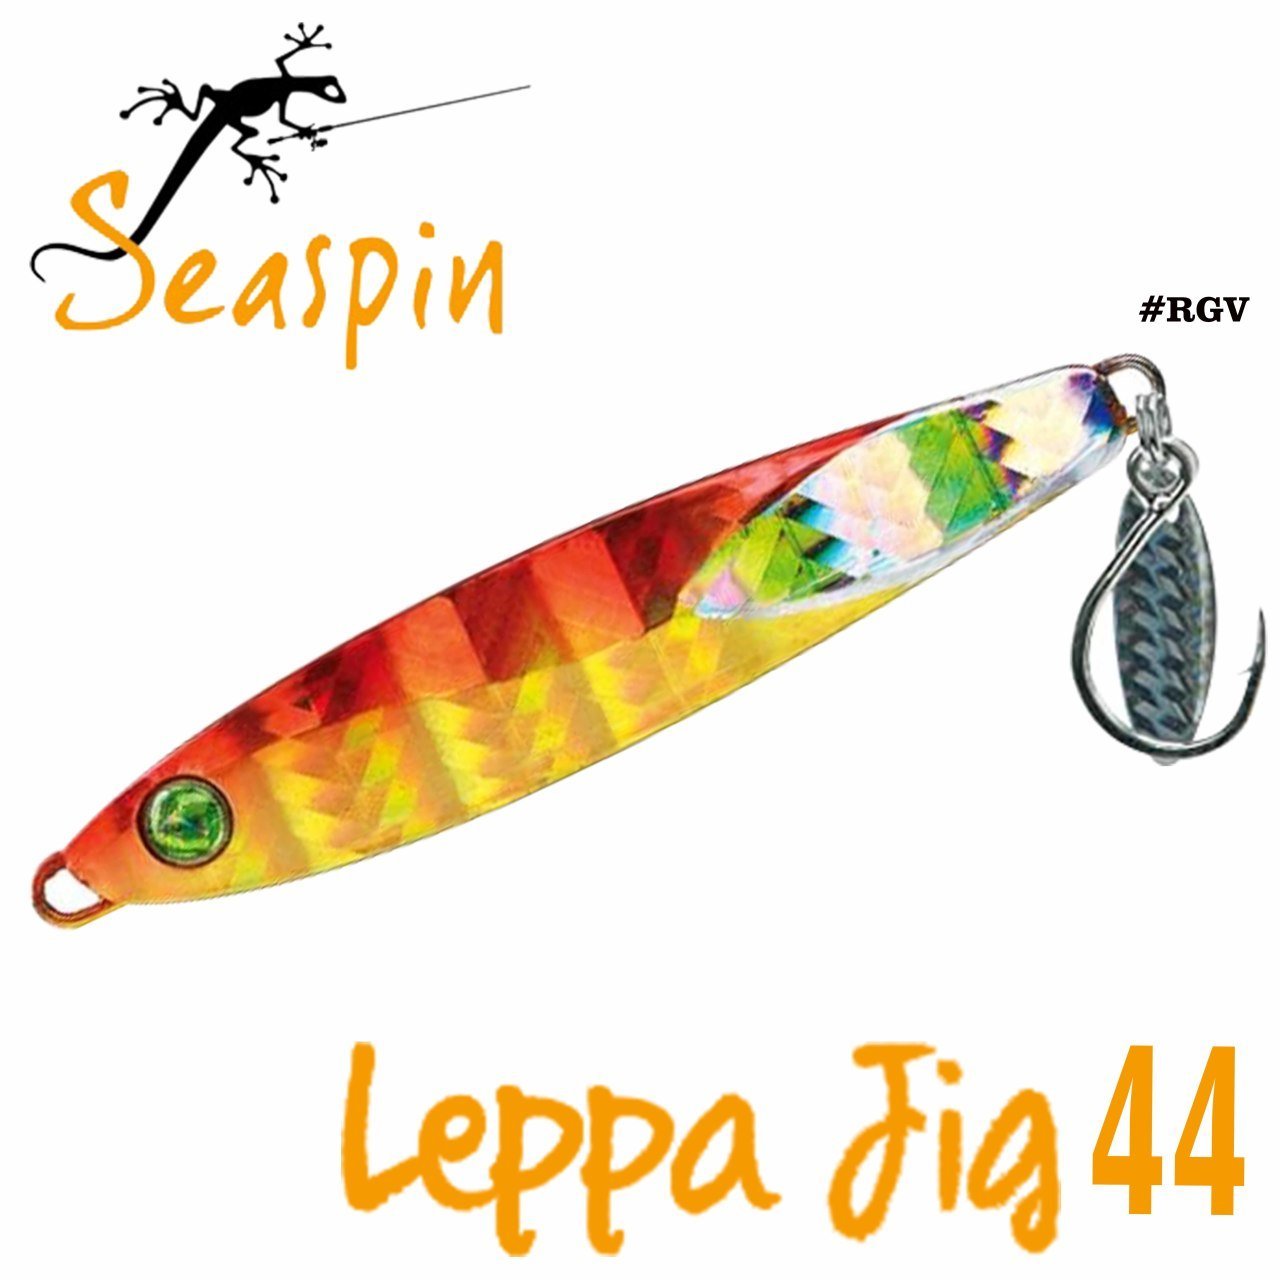 Seaspin Leppa 44gr jig yem #RGV